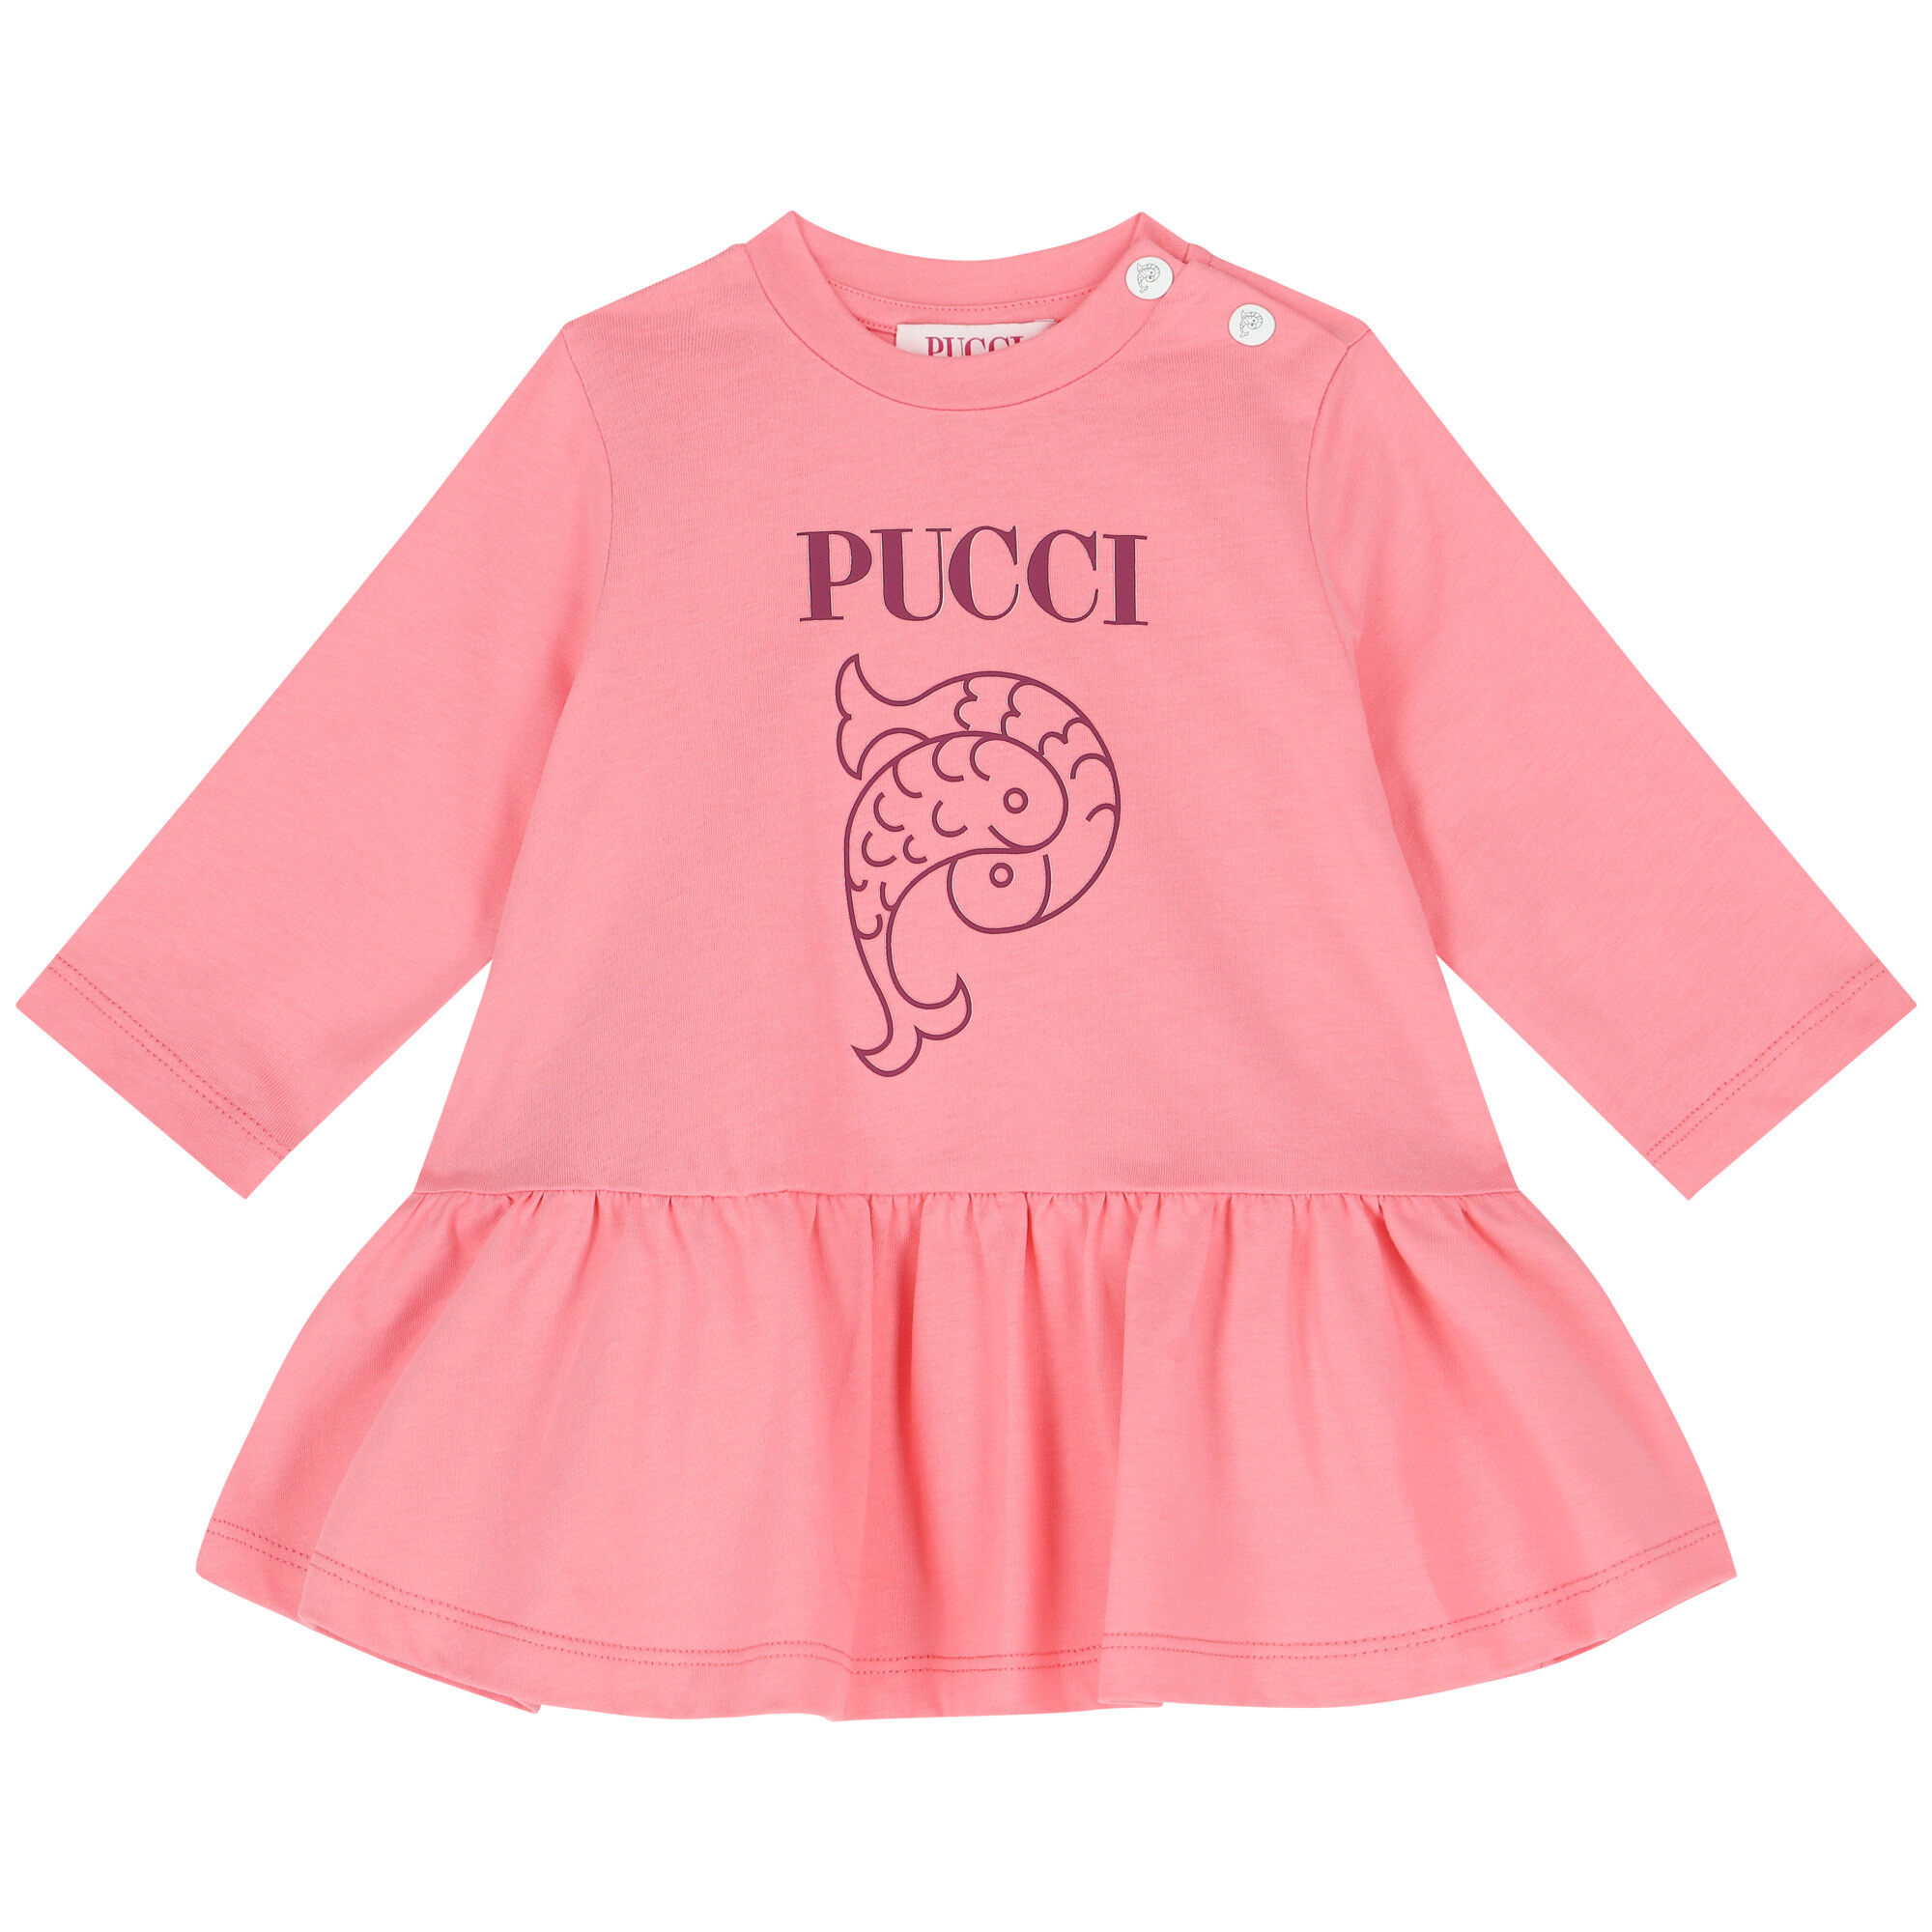 Emilio Pucci Kids | Junior Couture USA